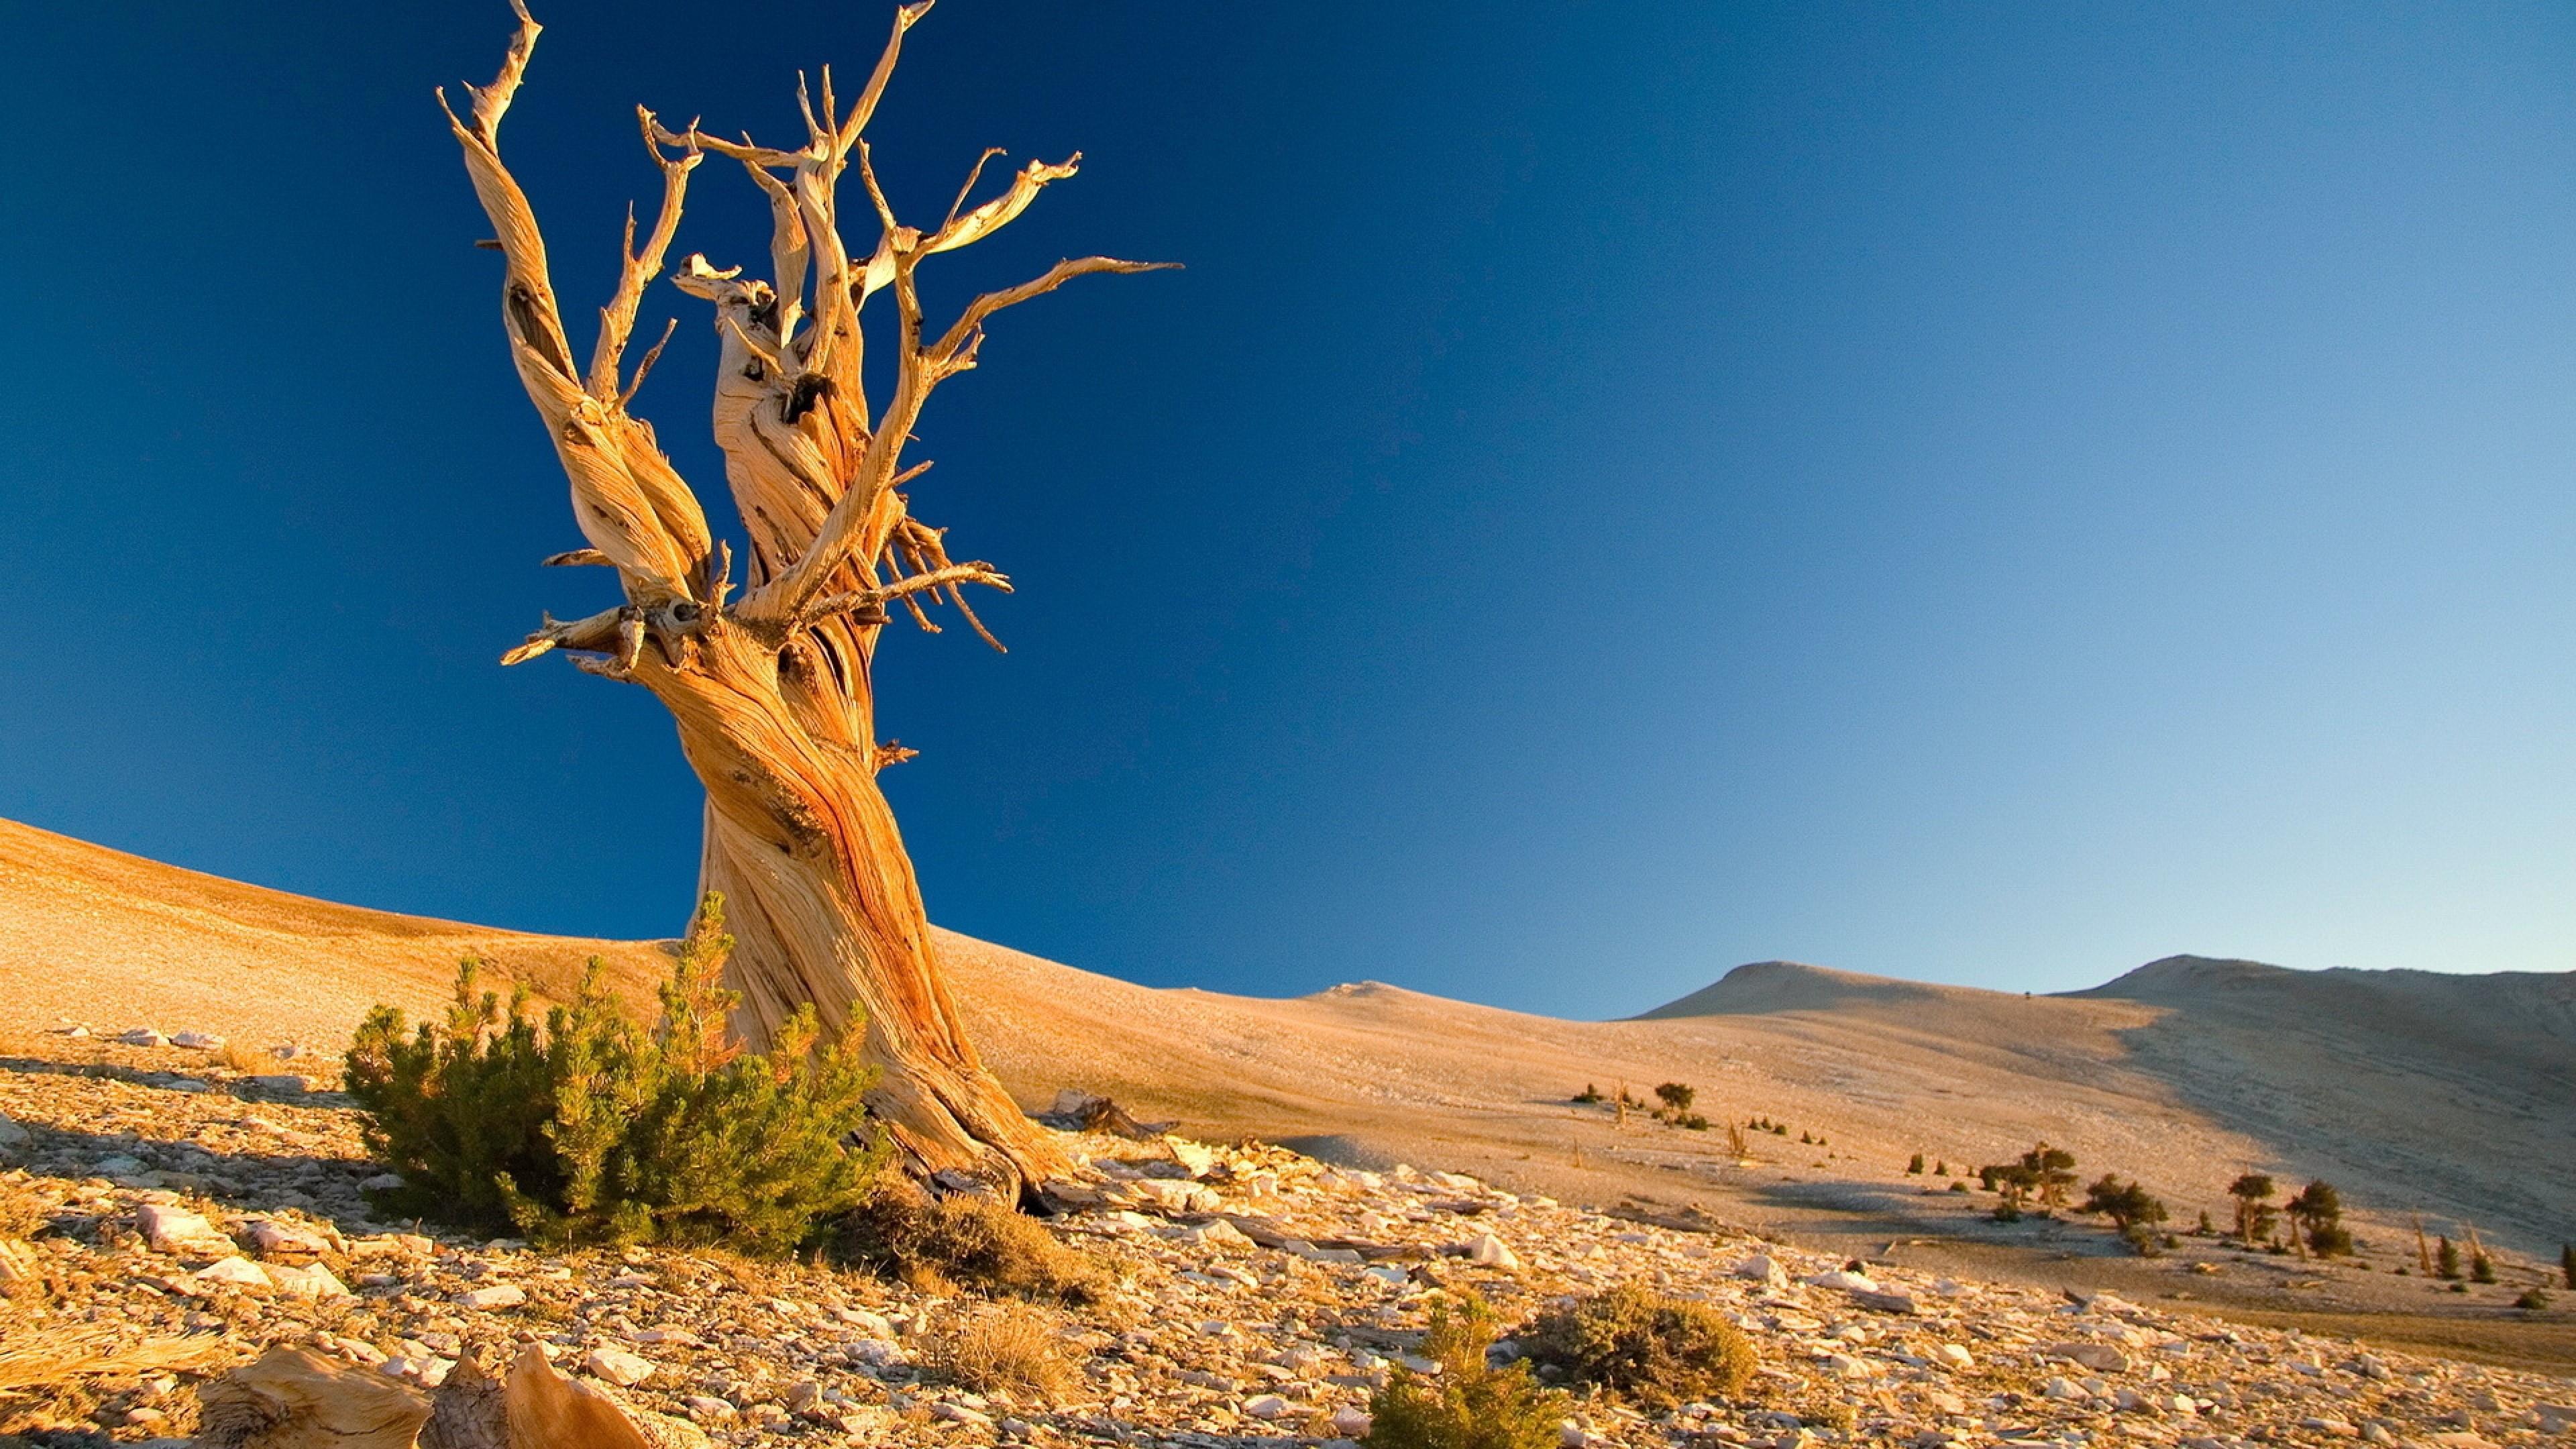 Dry Tree In The Desert Wallpaper | Wallpaper Studio 10 | Tens of ...